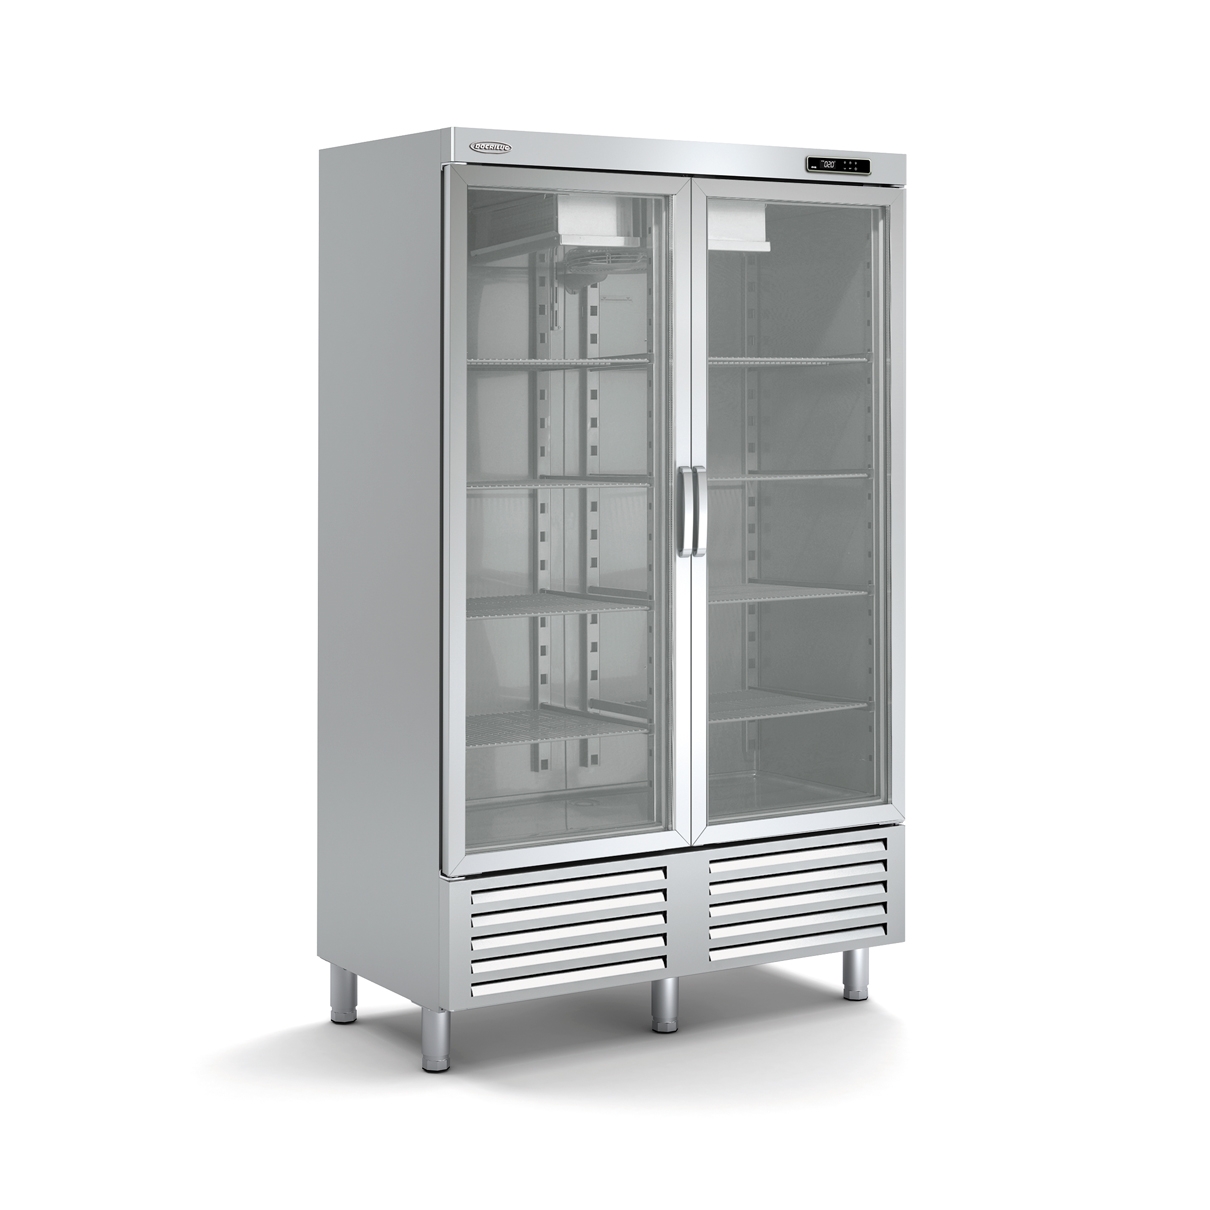 Snack Refrigerated Cabinet AR-125-2-E